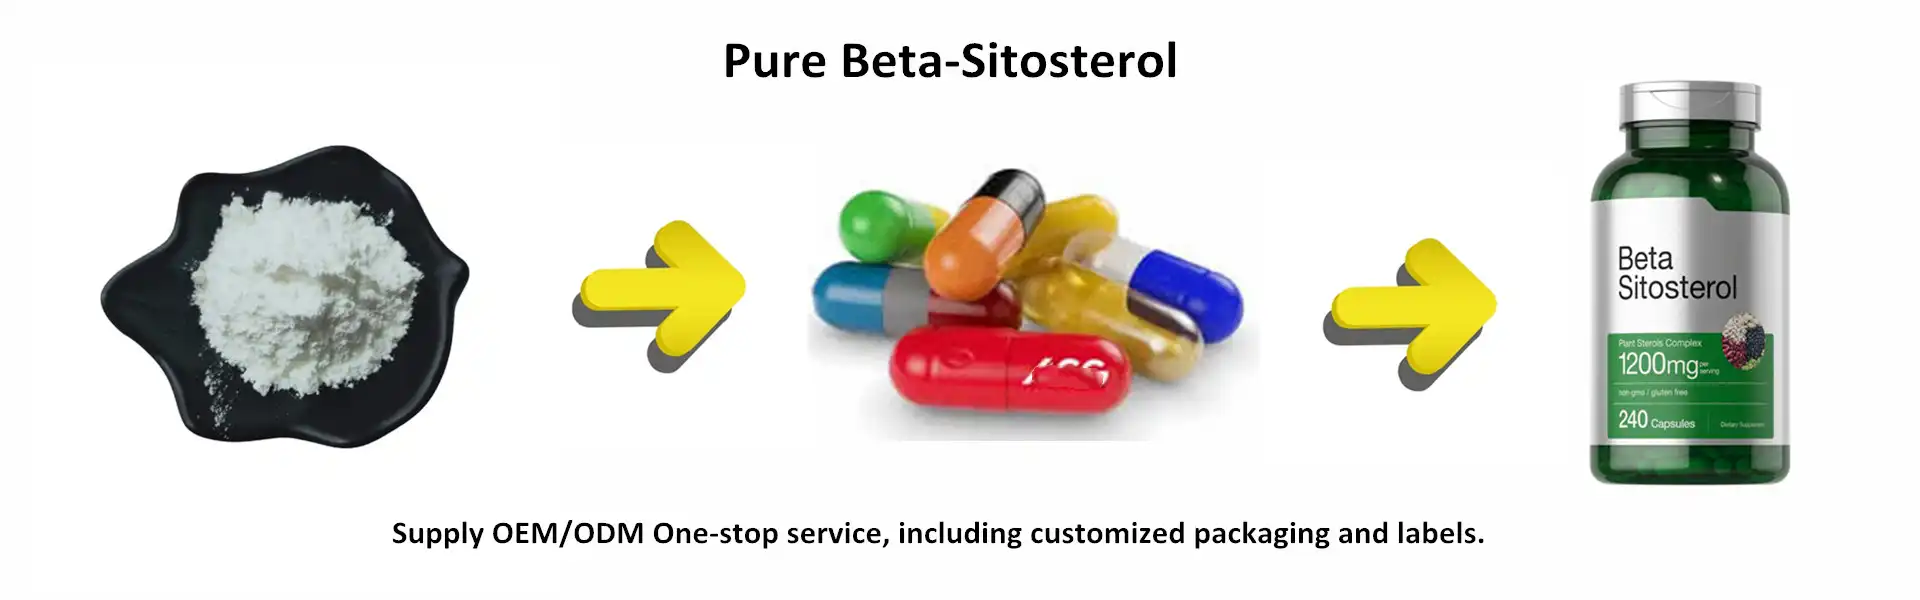 Pure Beta-Sitosterol